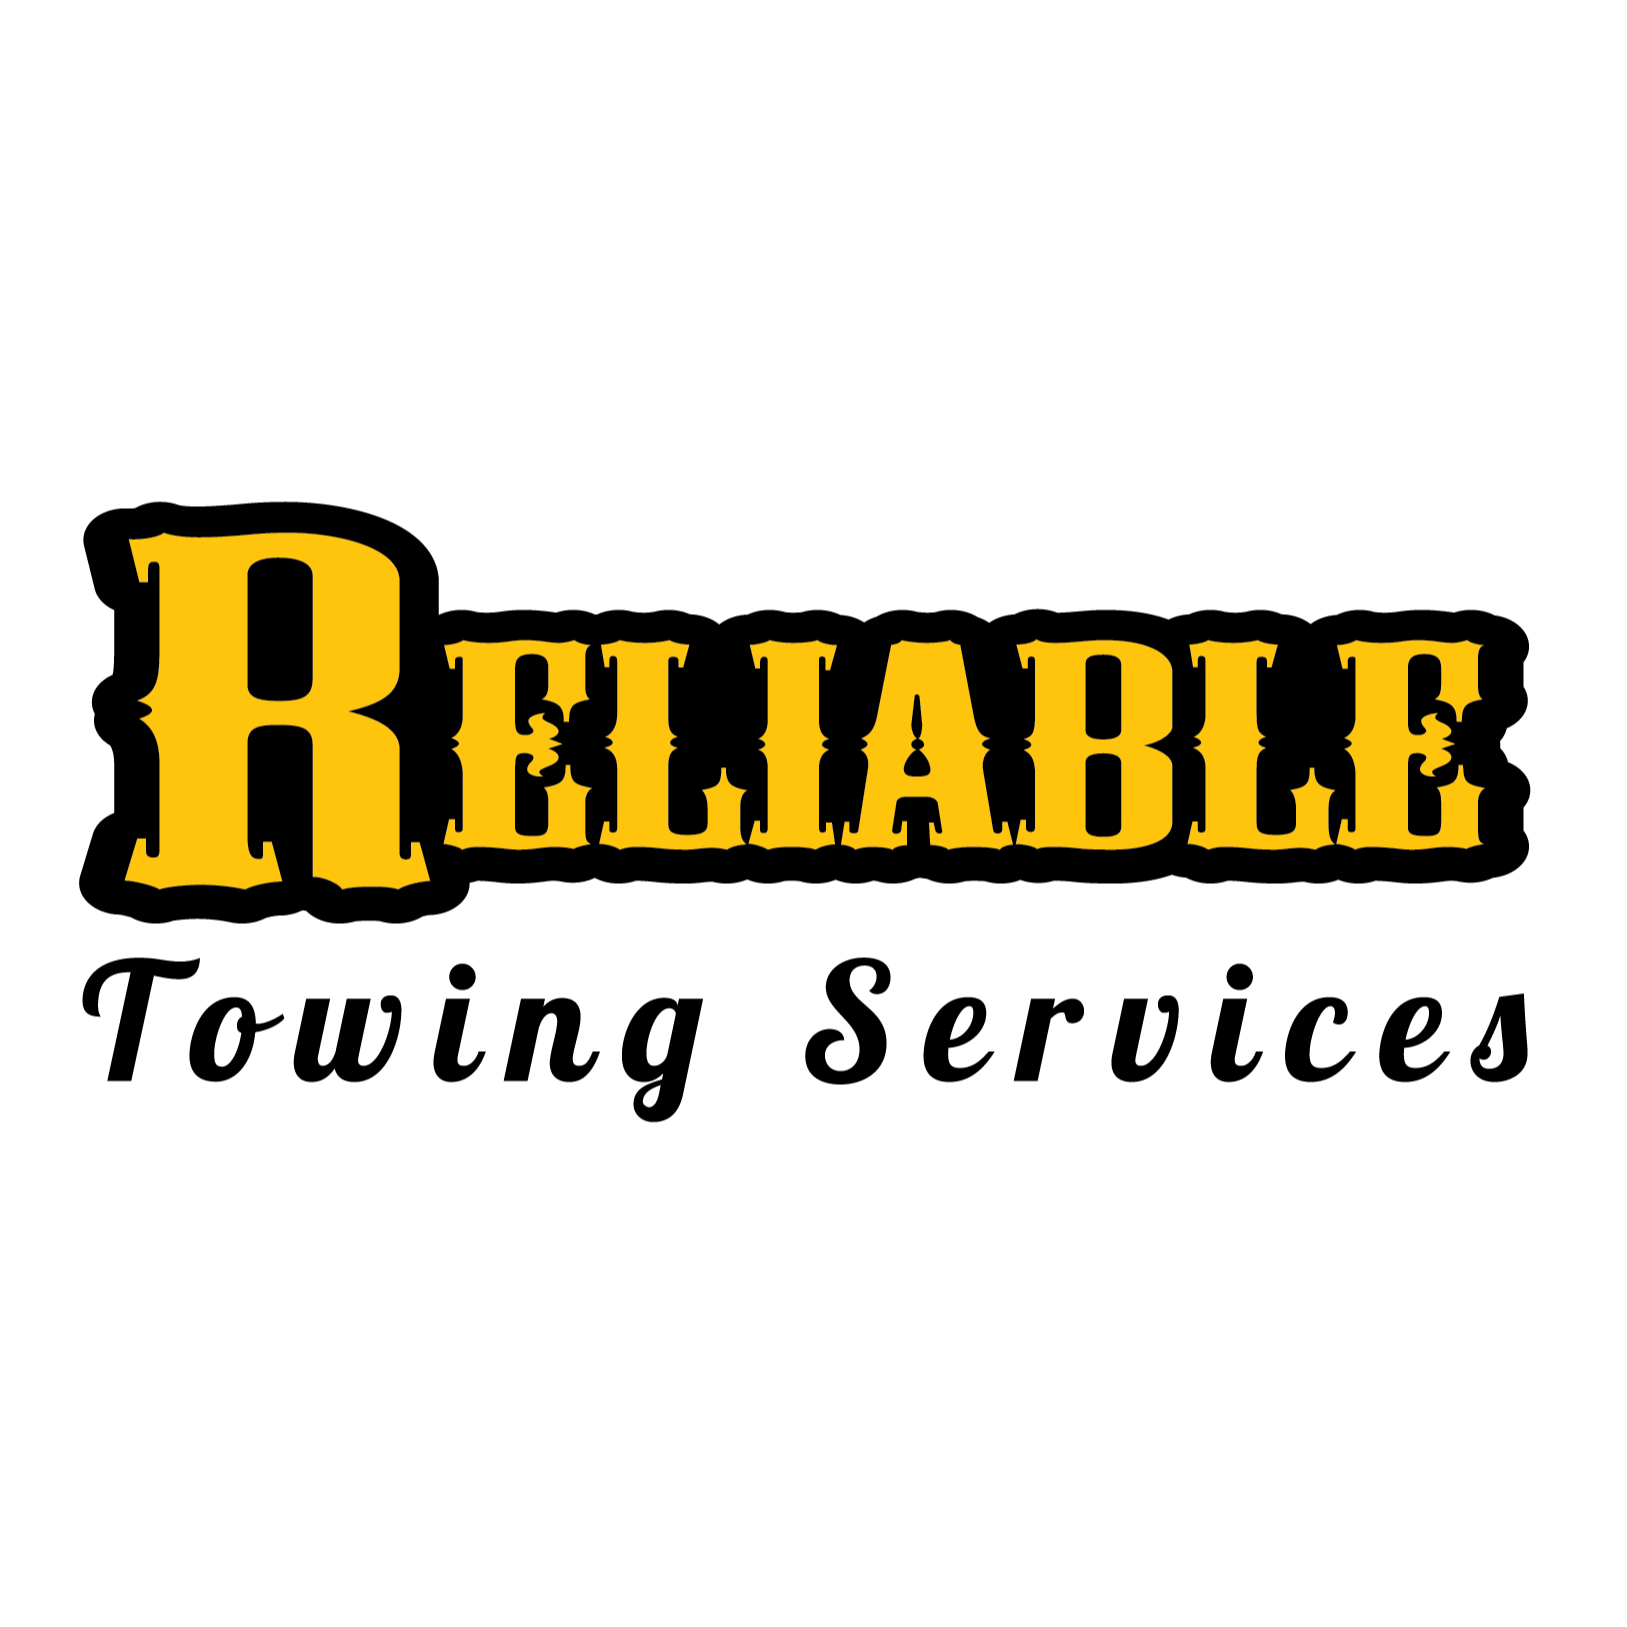 Reliable Towing Services - Merritt, BC V1K 1C1 - (250)378-5000 | ShowMeLocal.com